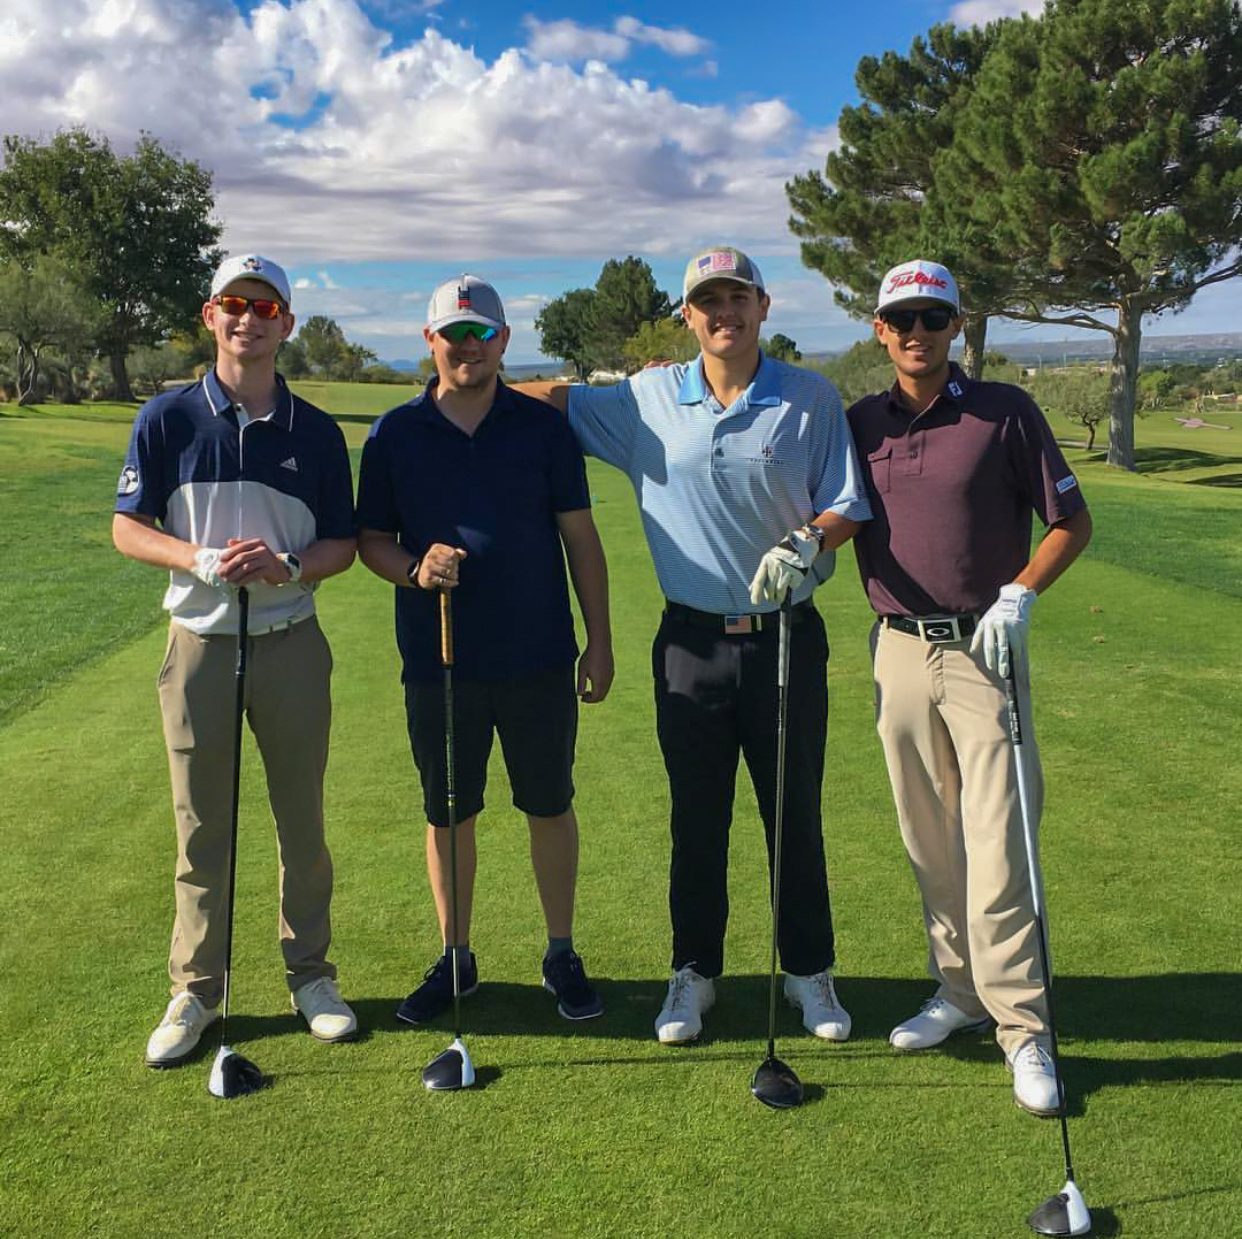 Four golfers on a golf course